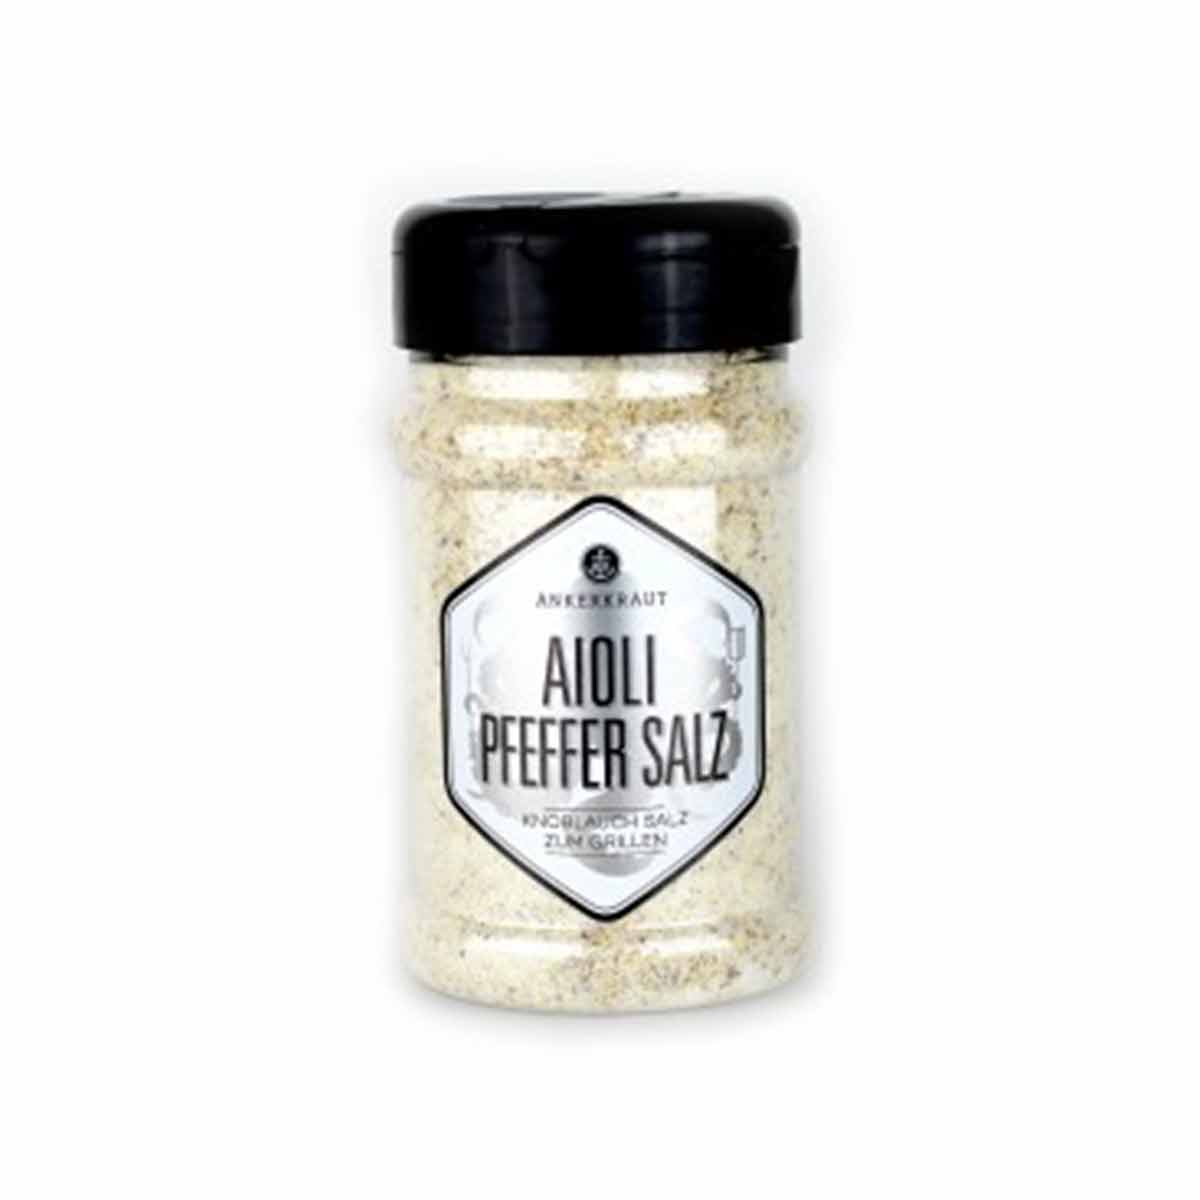 Ankerkraut Aioli Pfeffer Salz 310g